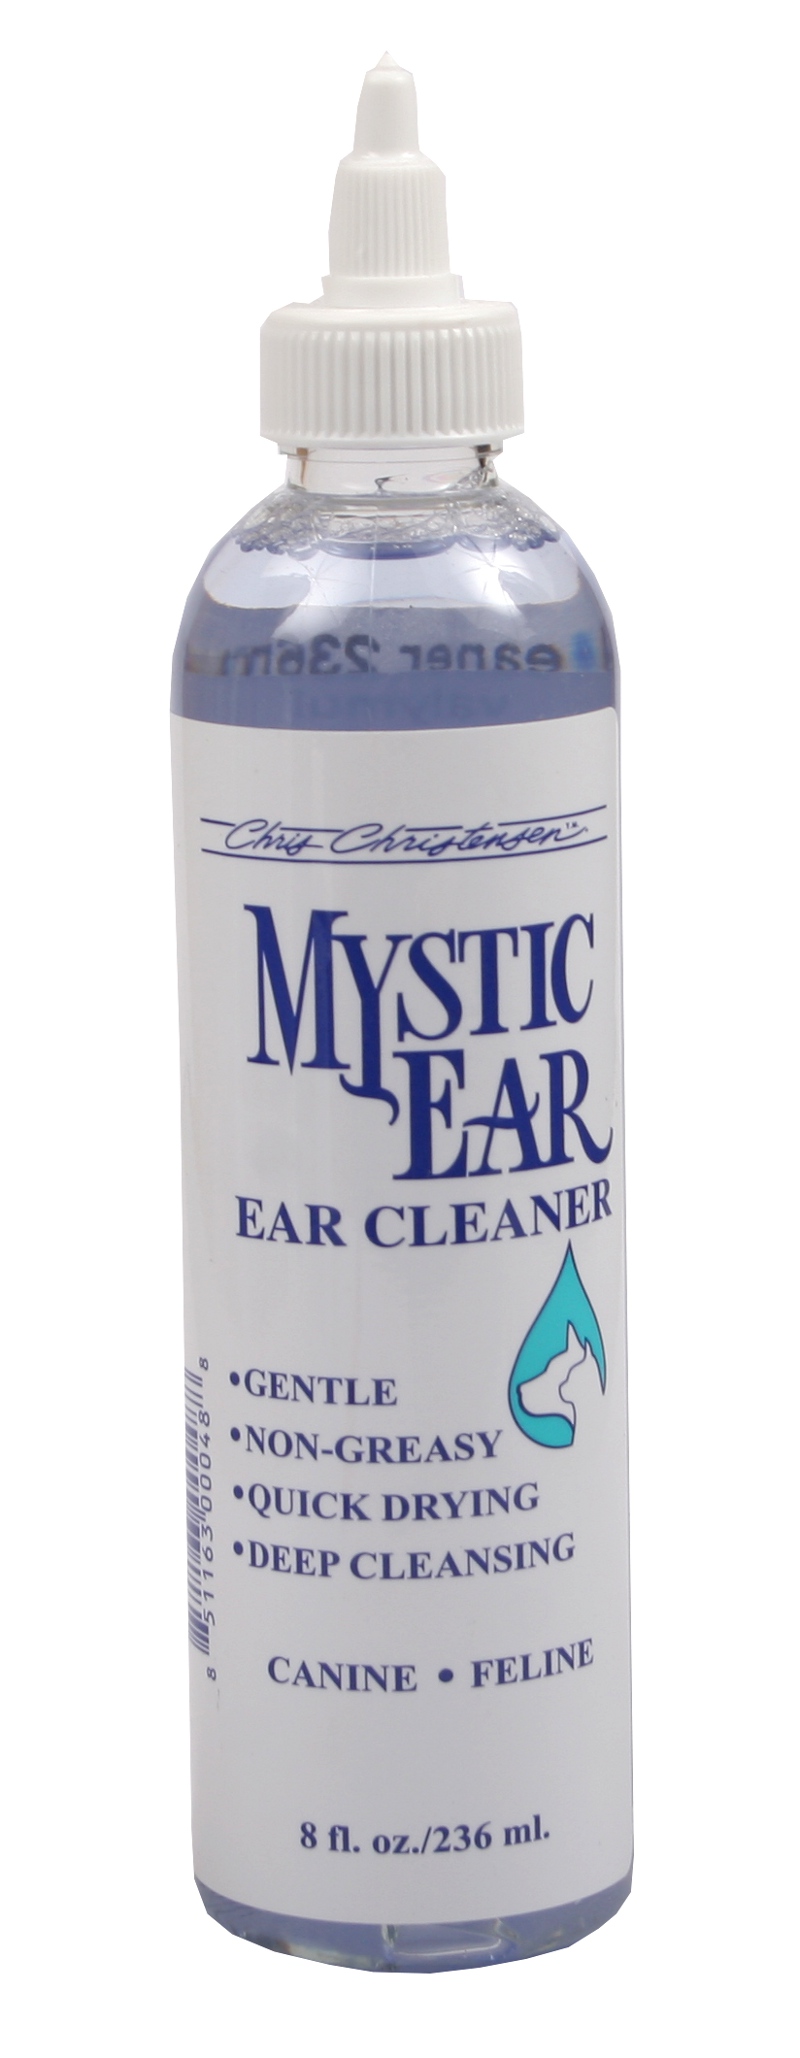 Mystic Ear Лосьон для чистки ушей